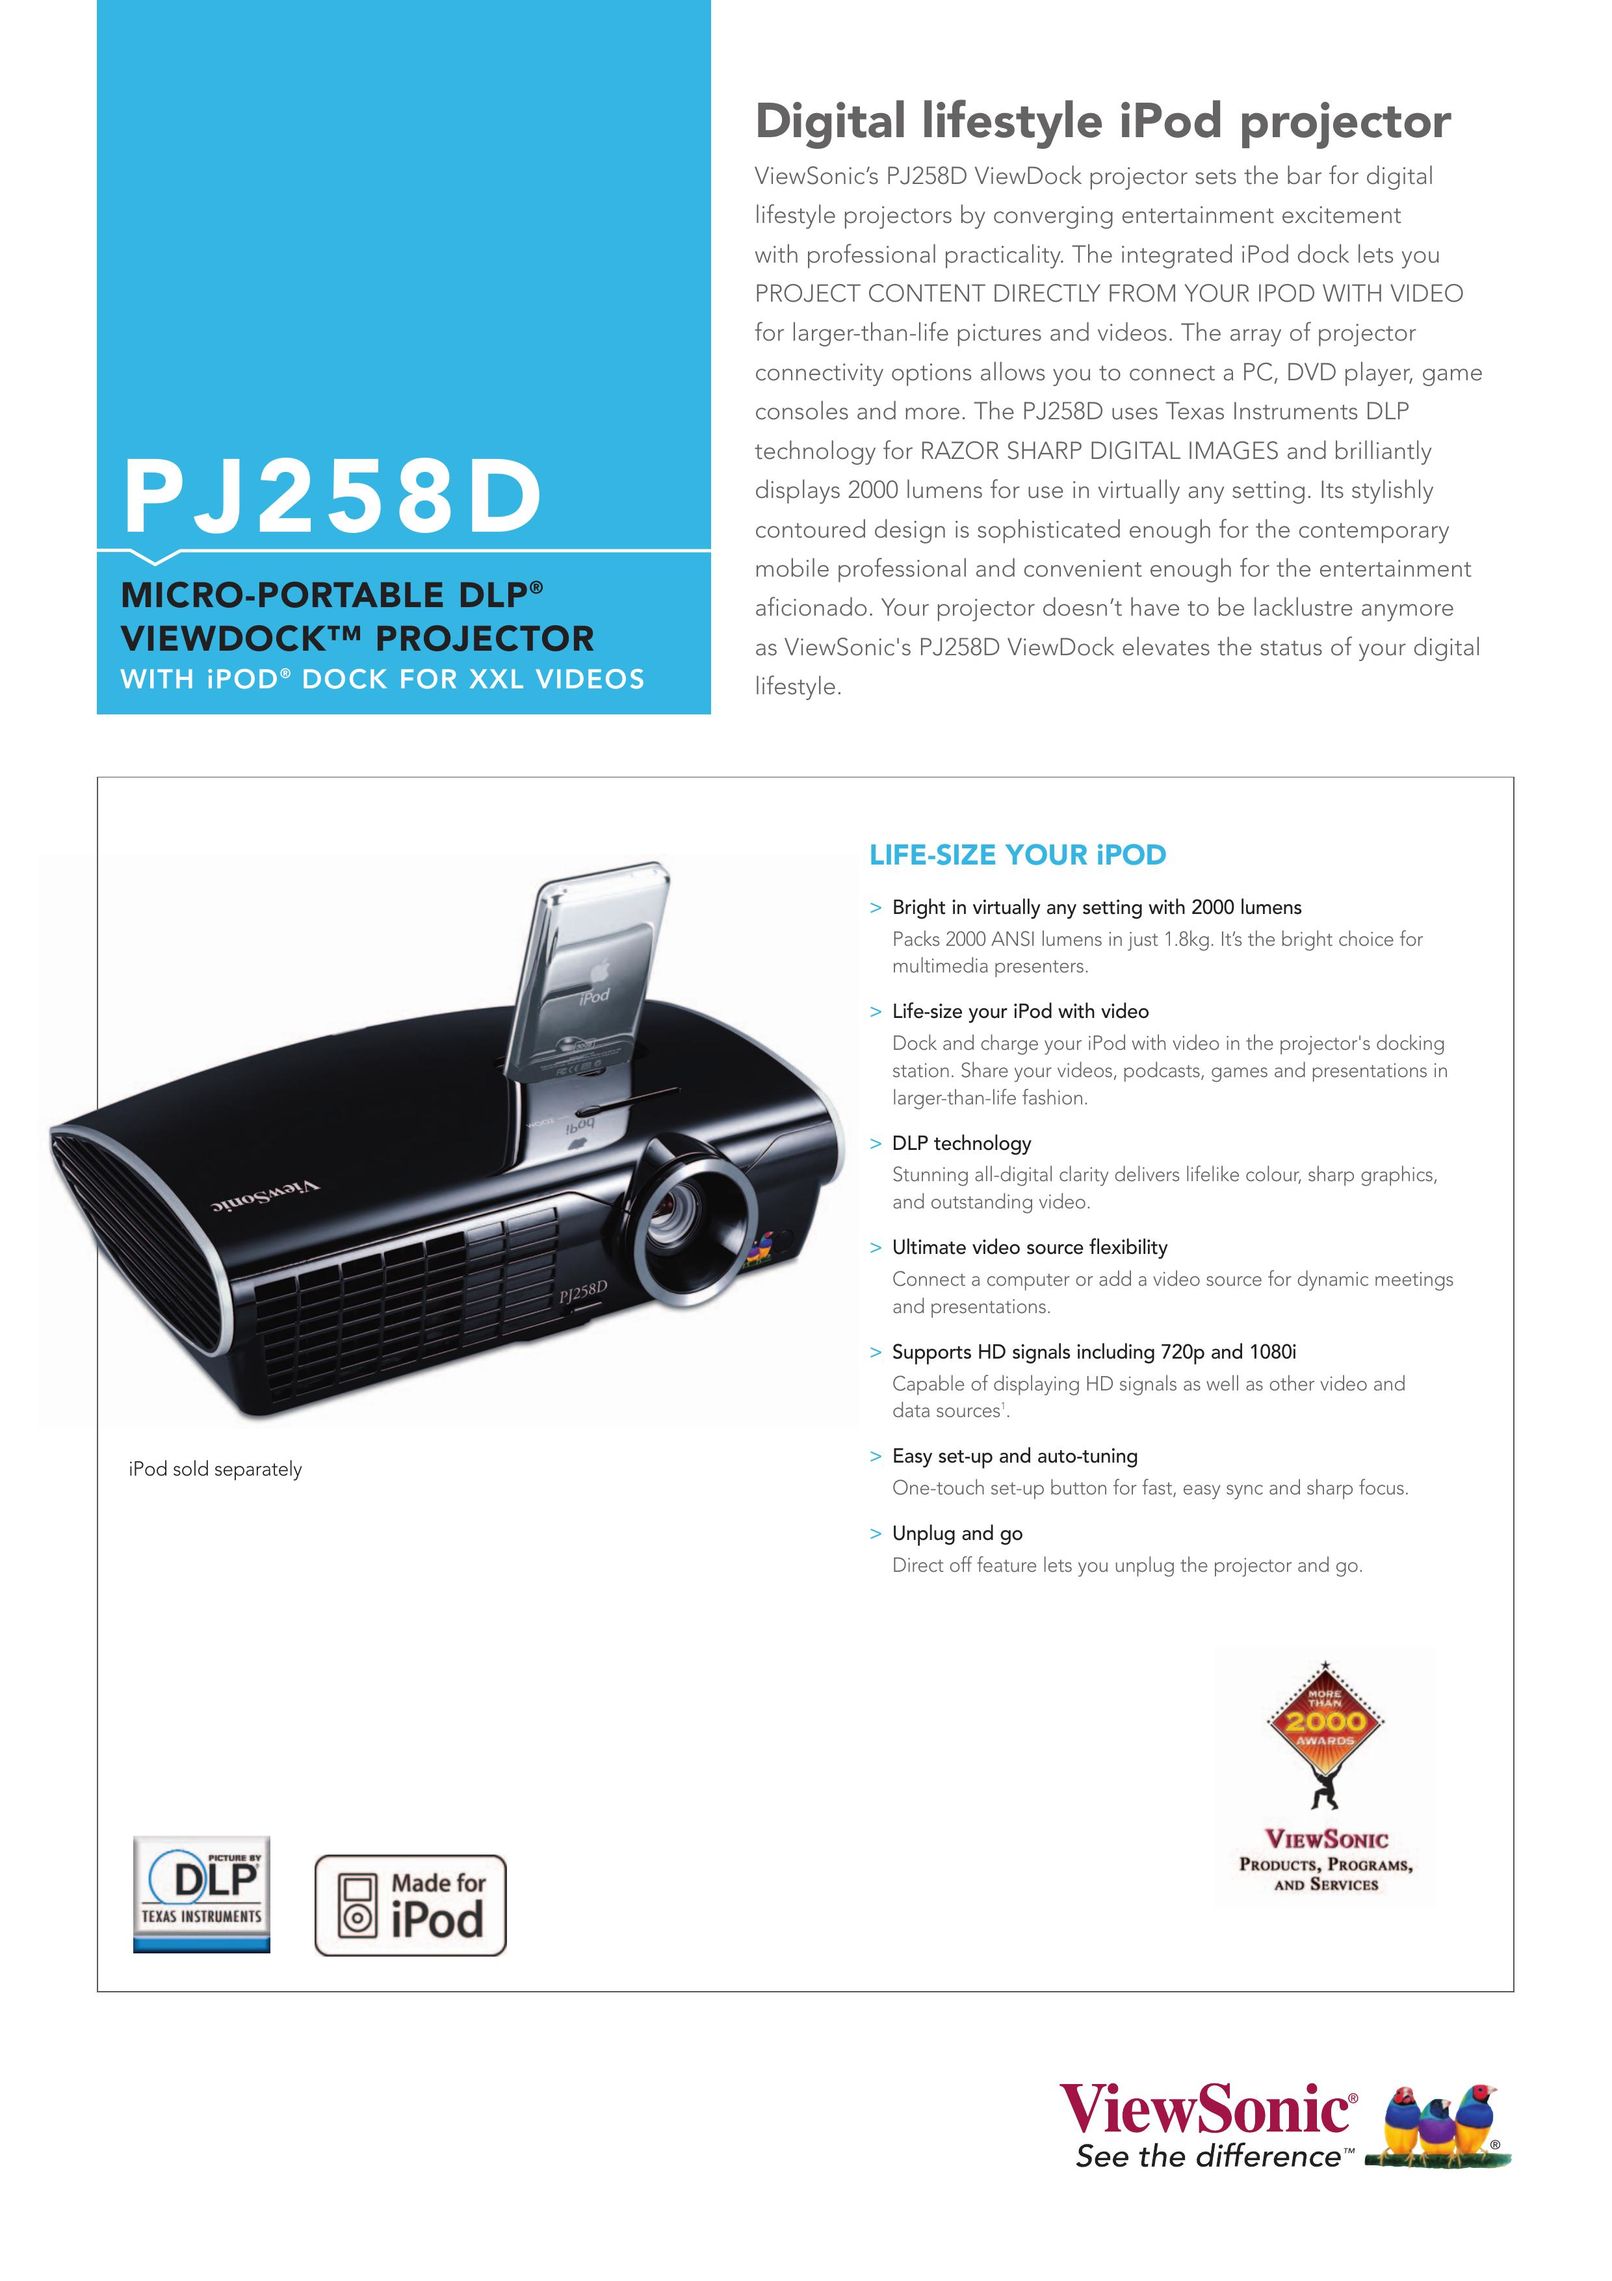 ViewSonic PJ258D Projector User Manual